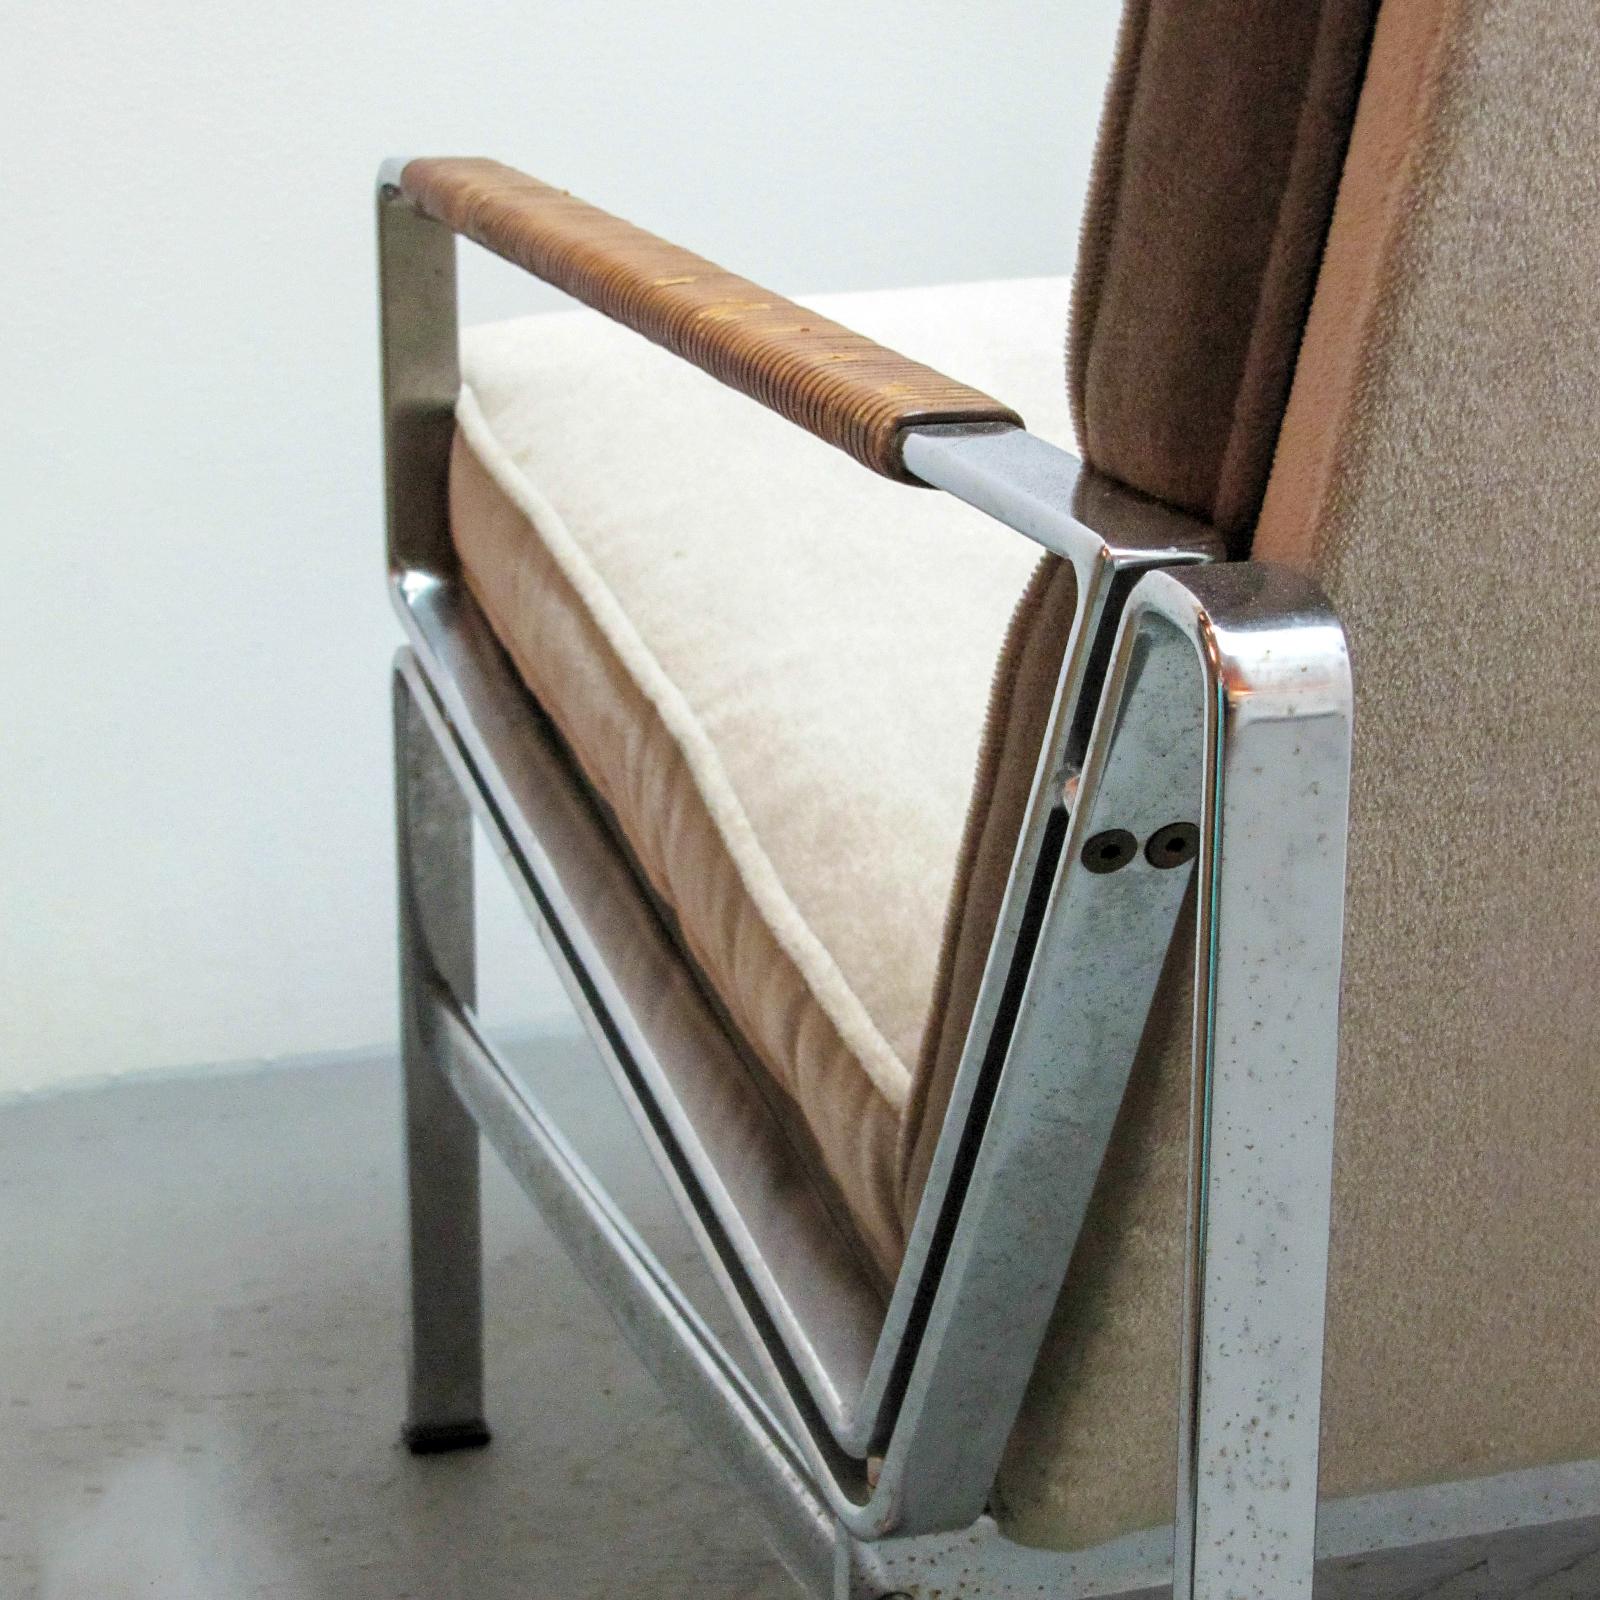 Steel Preben Fabricius & Jørgen Kastholm Arm Chair Modell FK 6720 For Sale